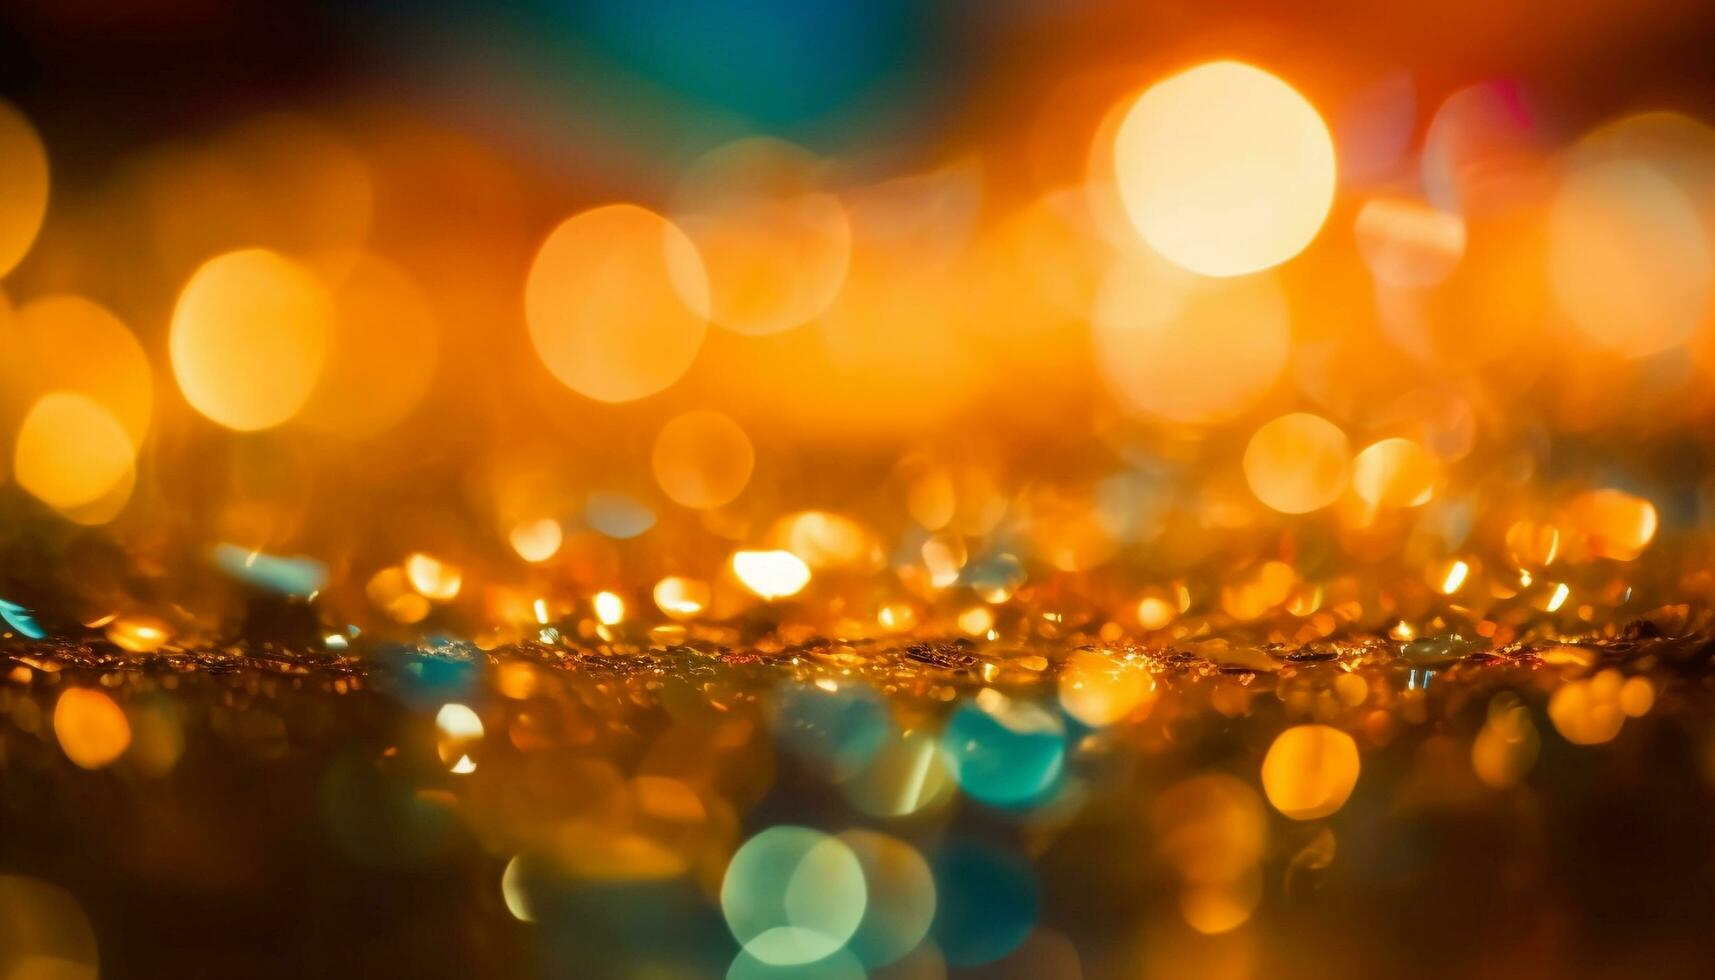 Shiny gold decorations illuminate the dark backdrop for celebration generated by AI photo